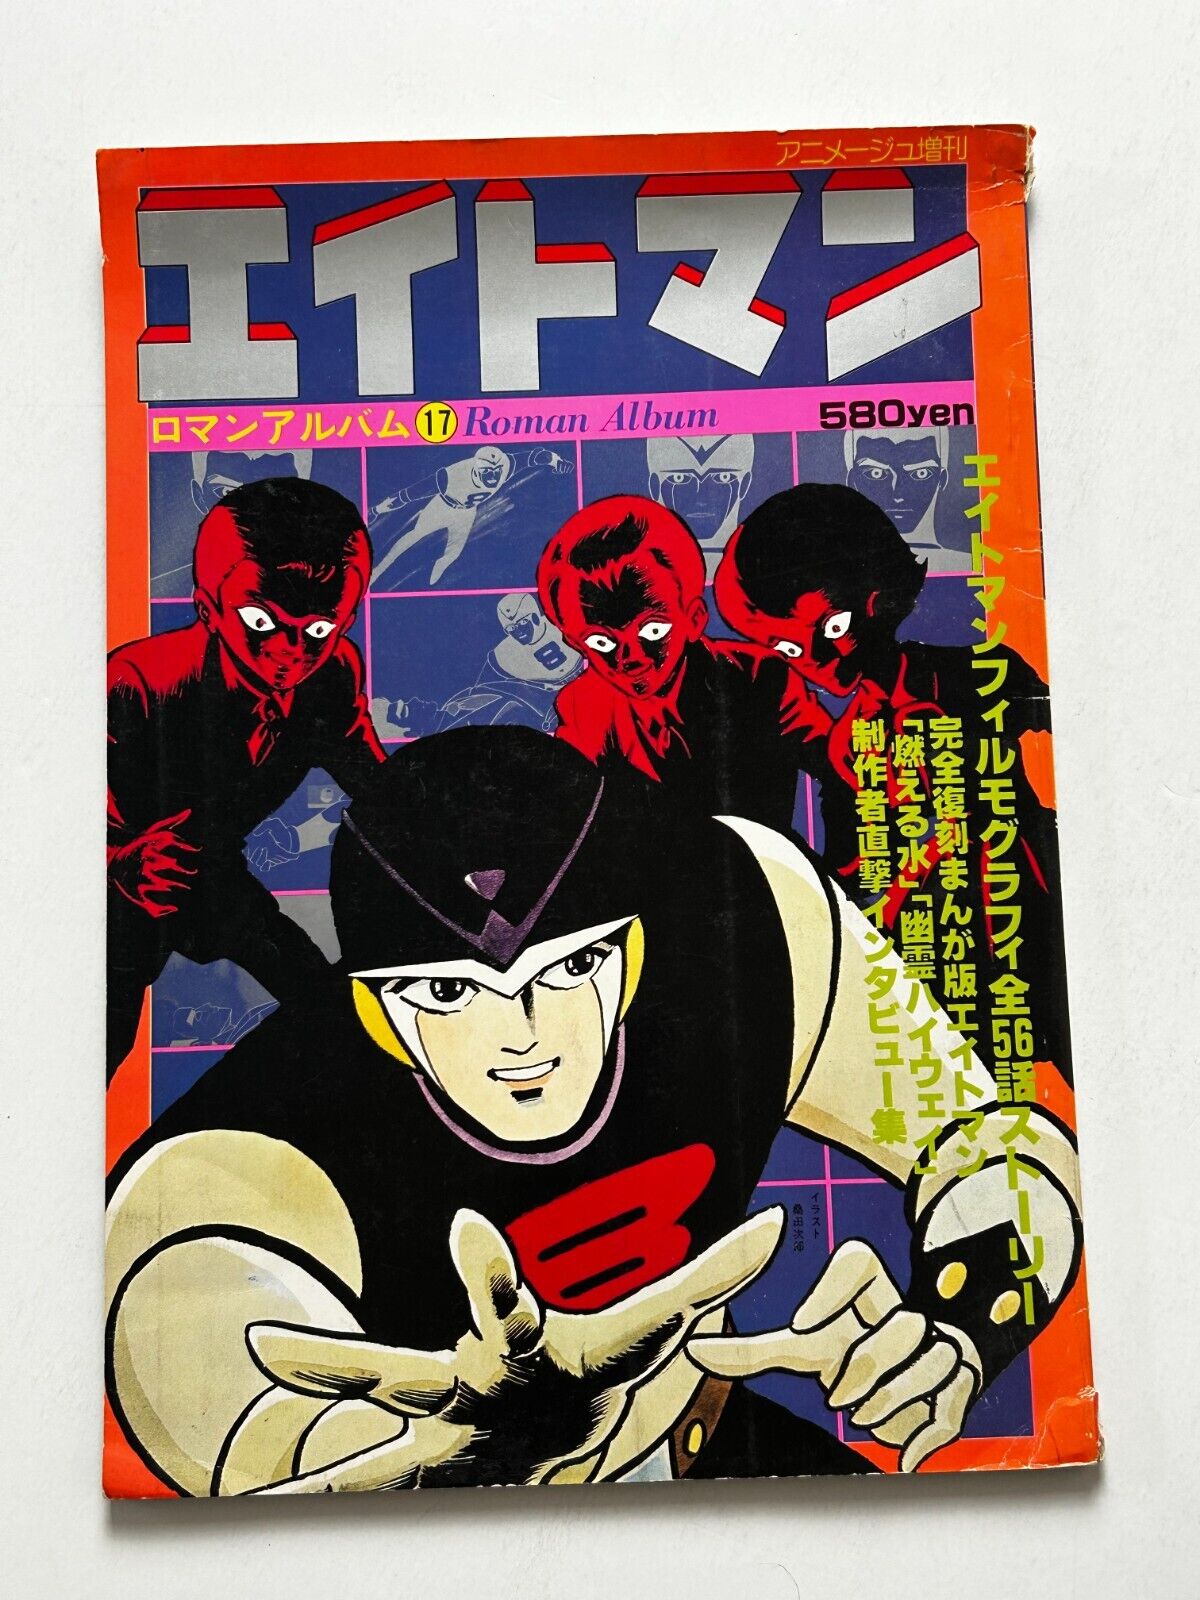 EIGHTMAN Eight Man Illustration Art Book w/ Poster Manga Anime 1979 Japanese